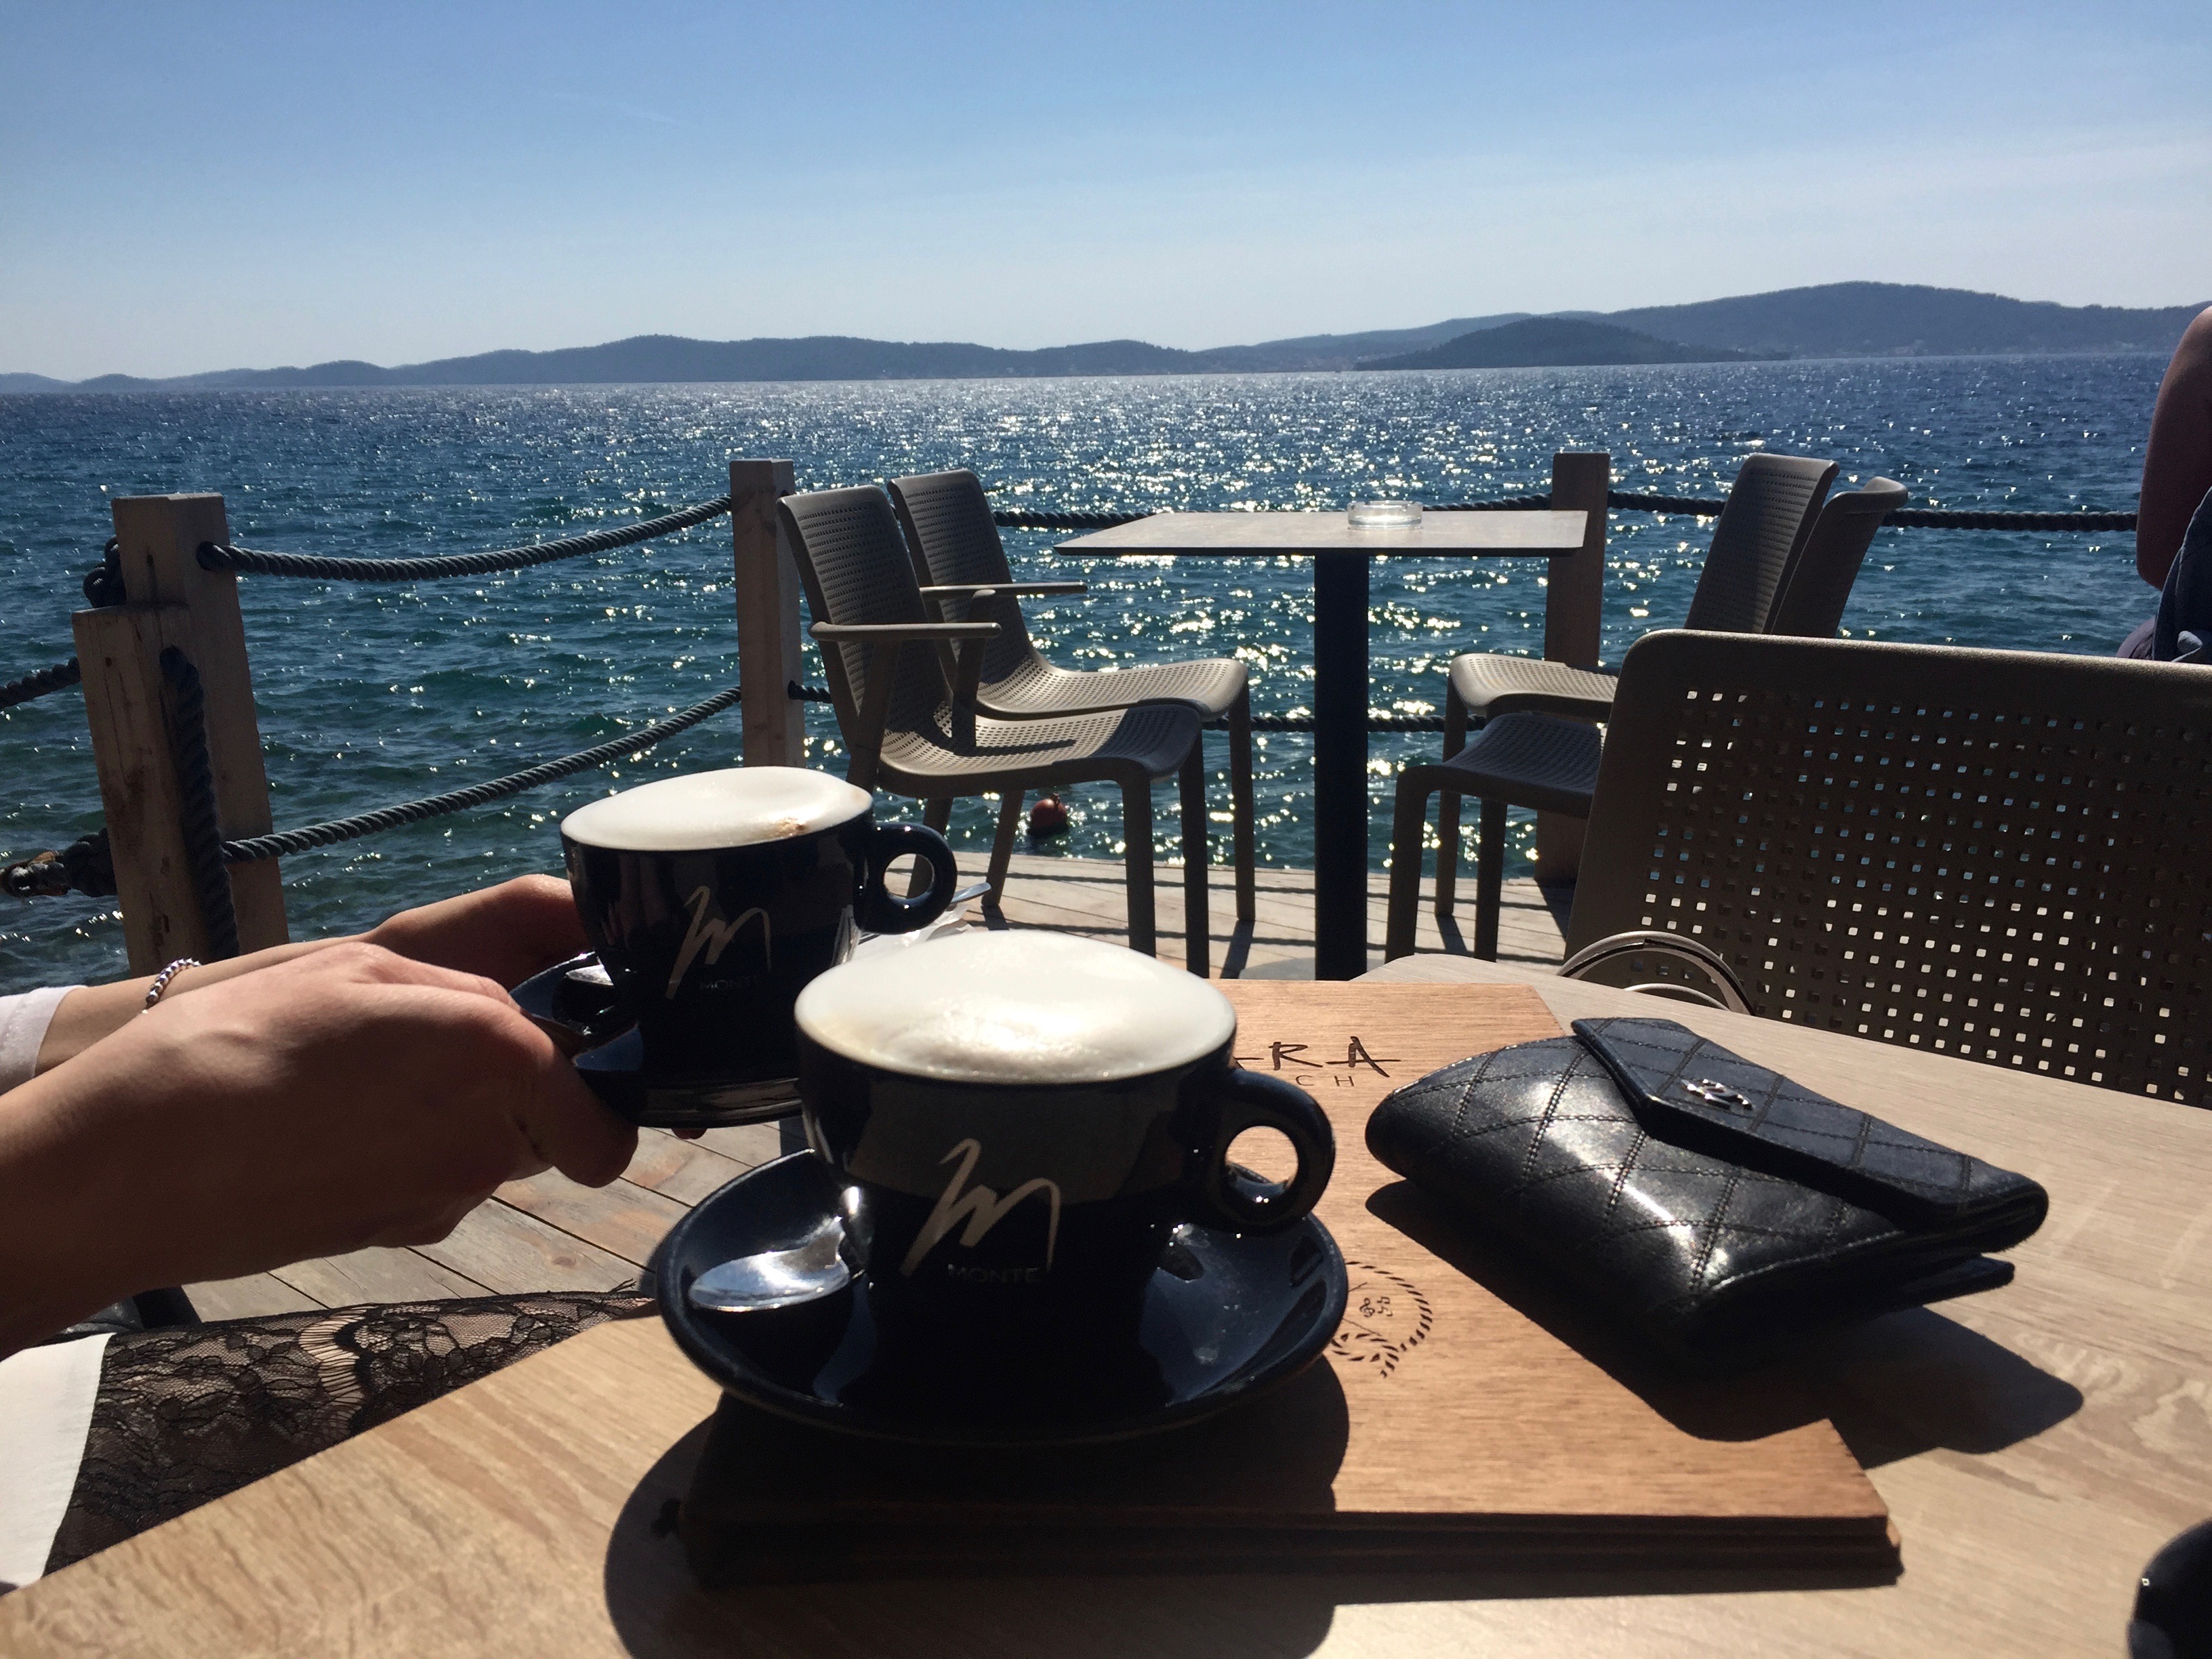 MON MODE | Travel Blogger | Mon Mode Blog | Toronto Blogger | Zadar Croatia Travel | Food & Beach | Europe